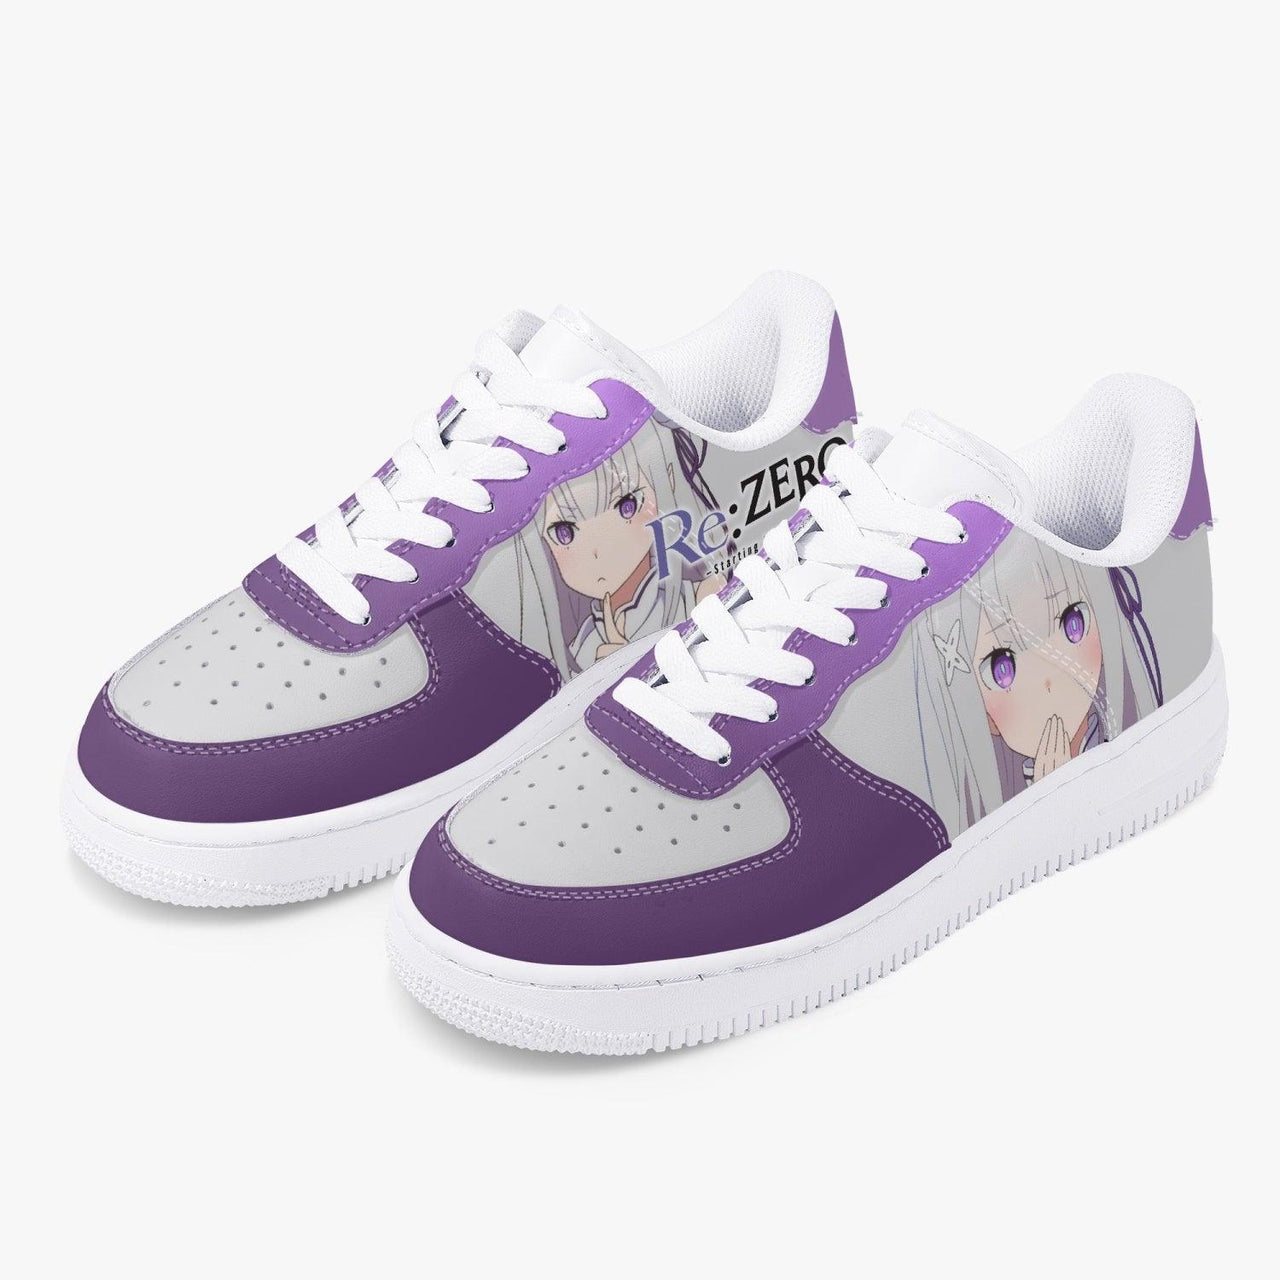 Re:Zero Emilia Air F1 Anime Shoes _ Re:Zero _ Ayuko